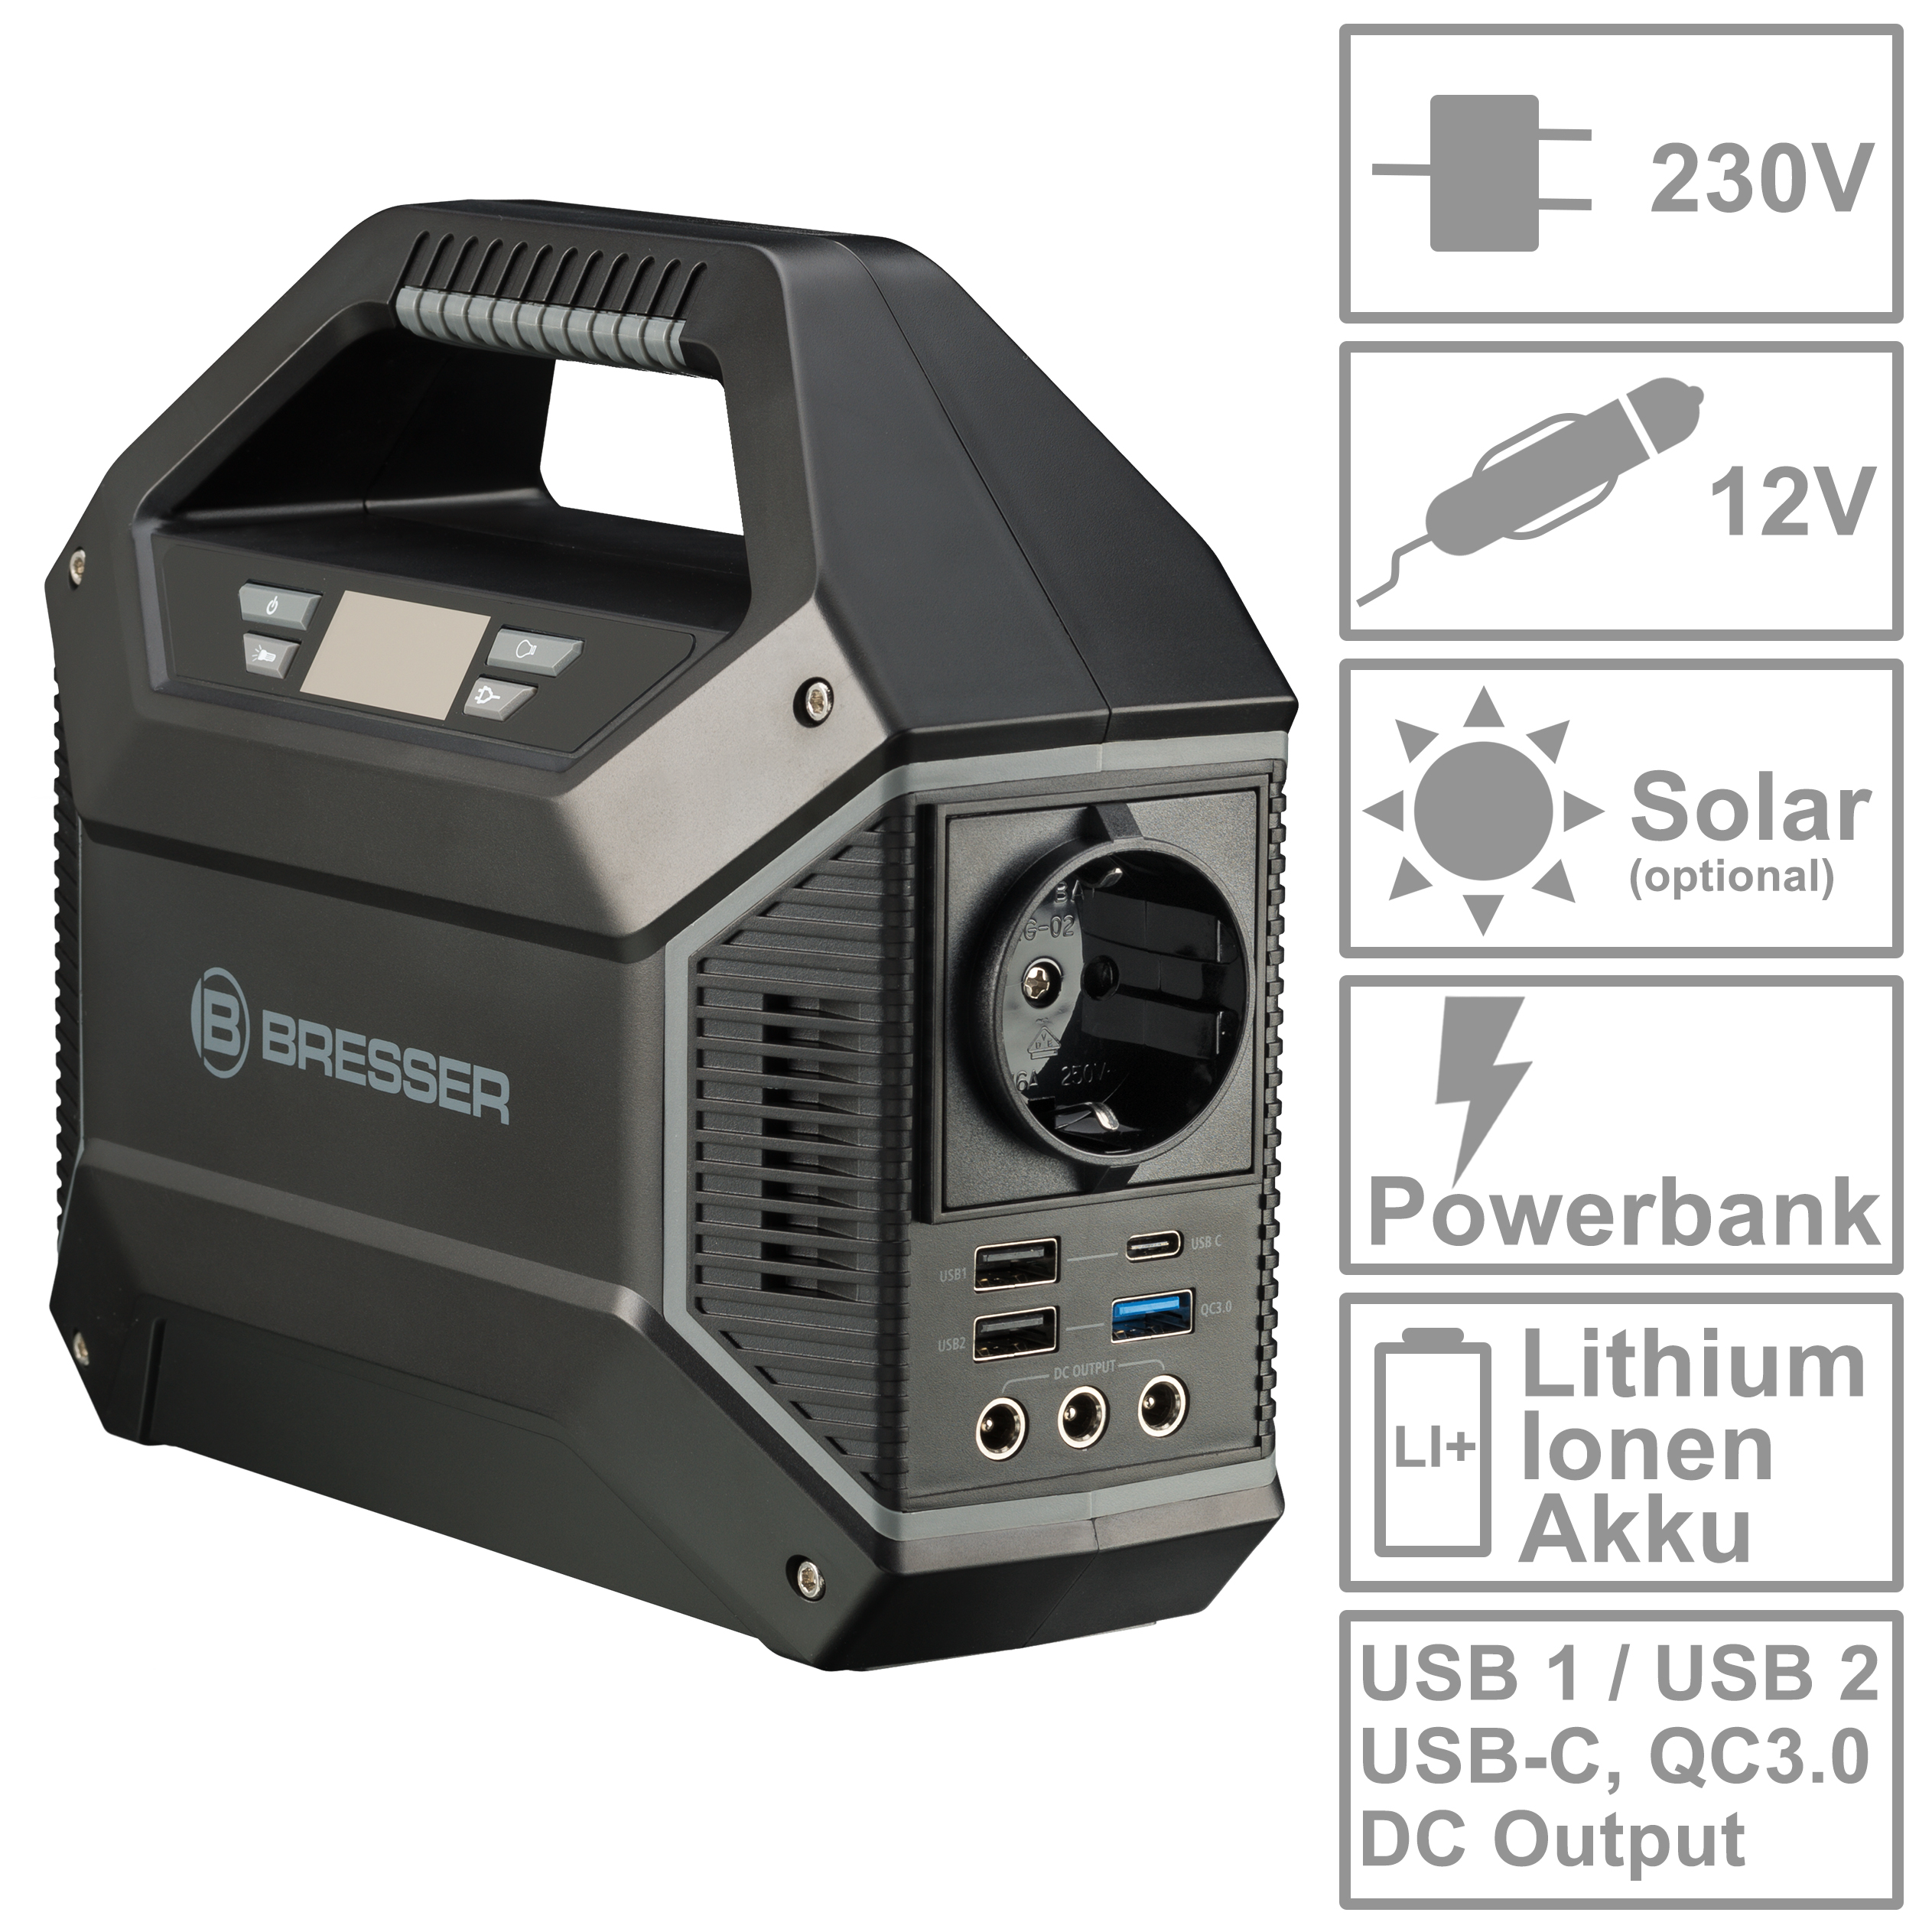 продаём Bresser Portable Power Supply 100 Watt (3810000) в Украине - фото 4